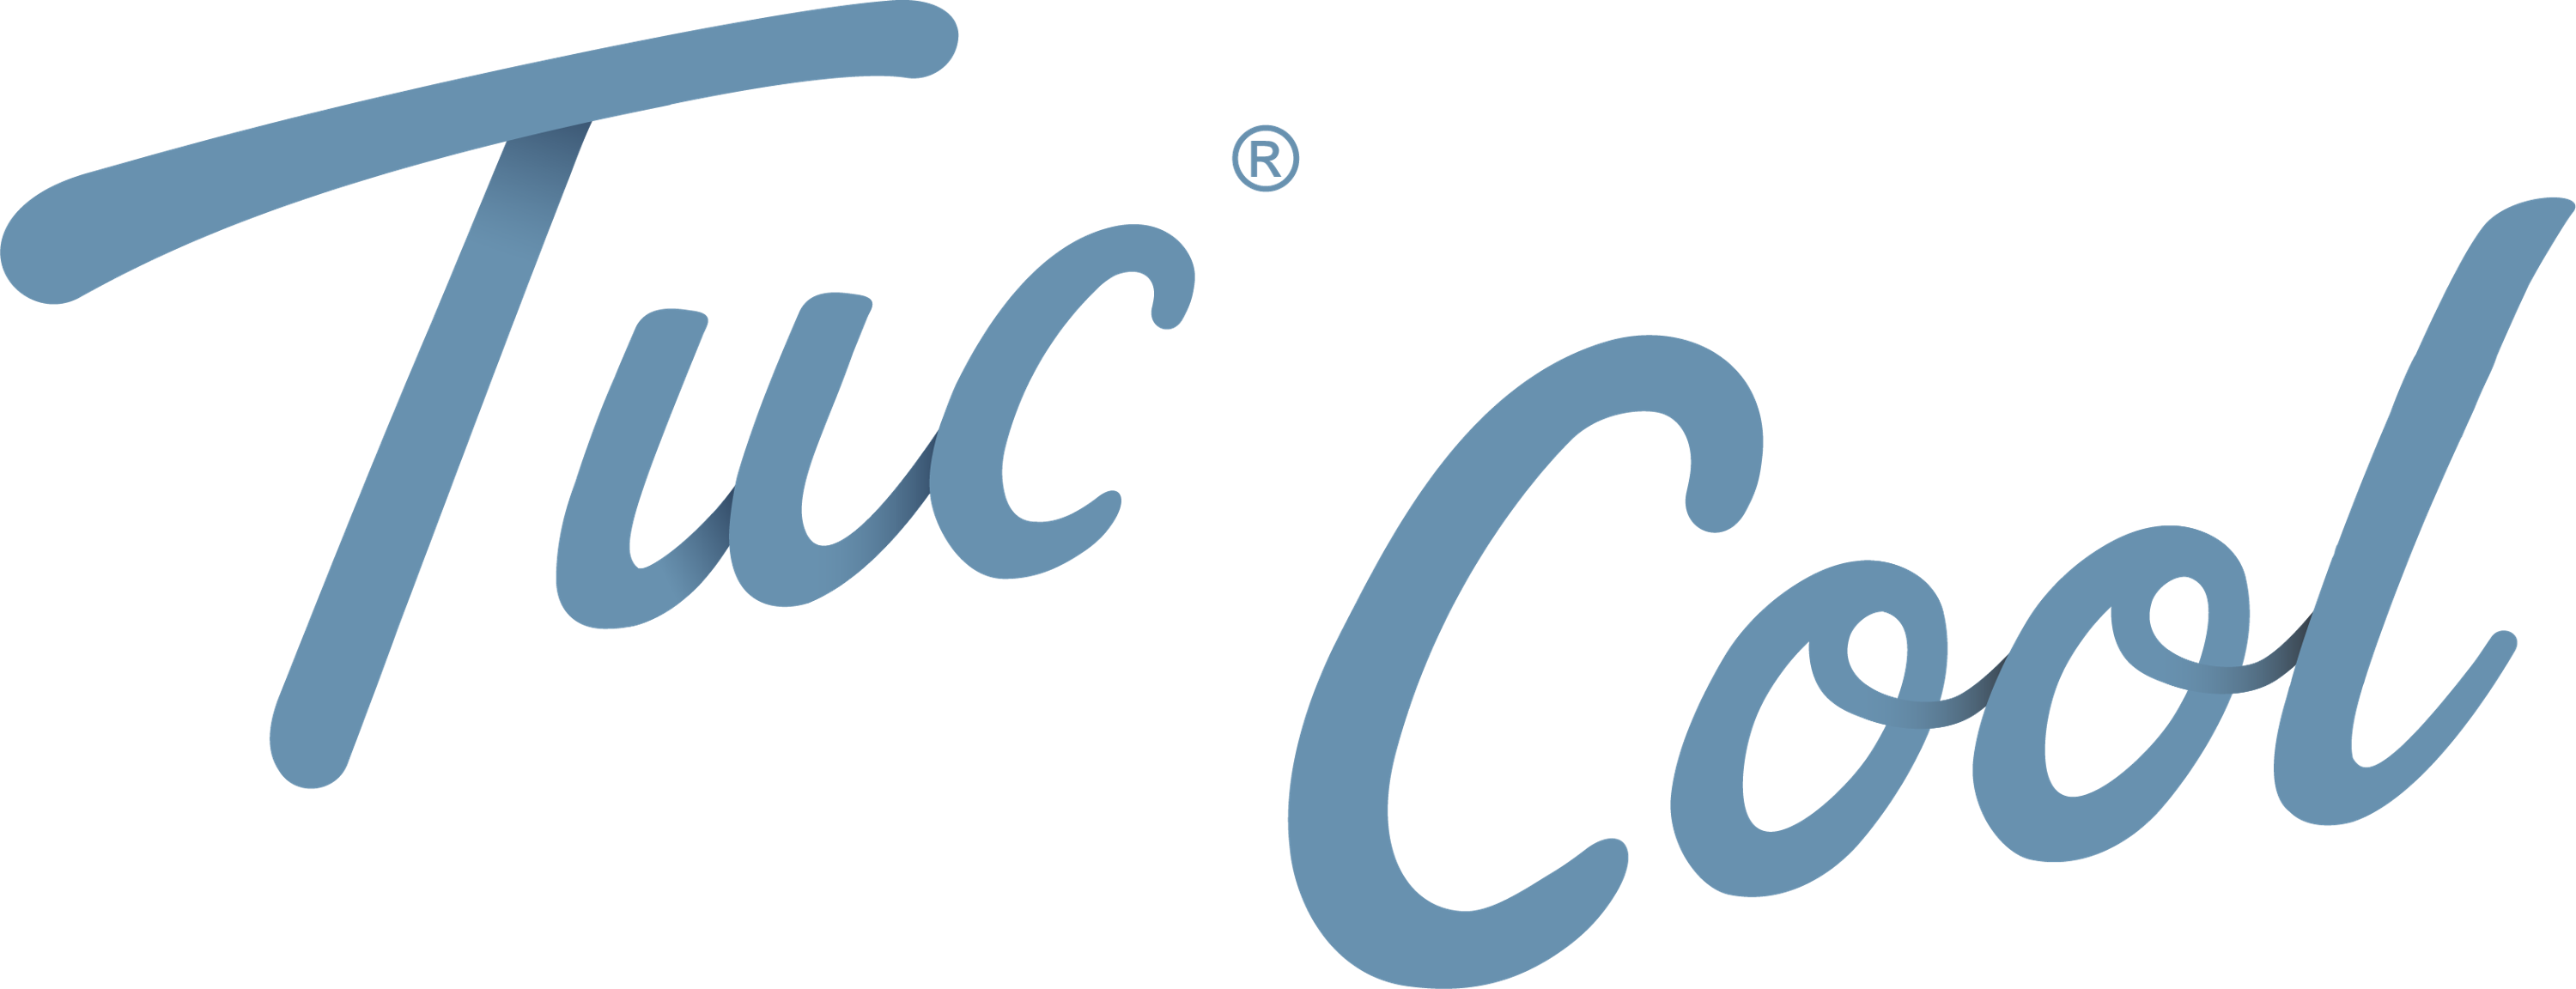 Tuc Cool Logo